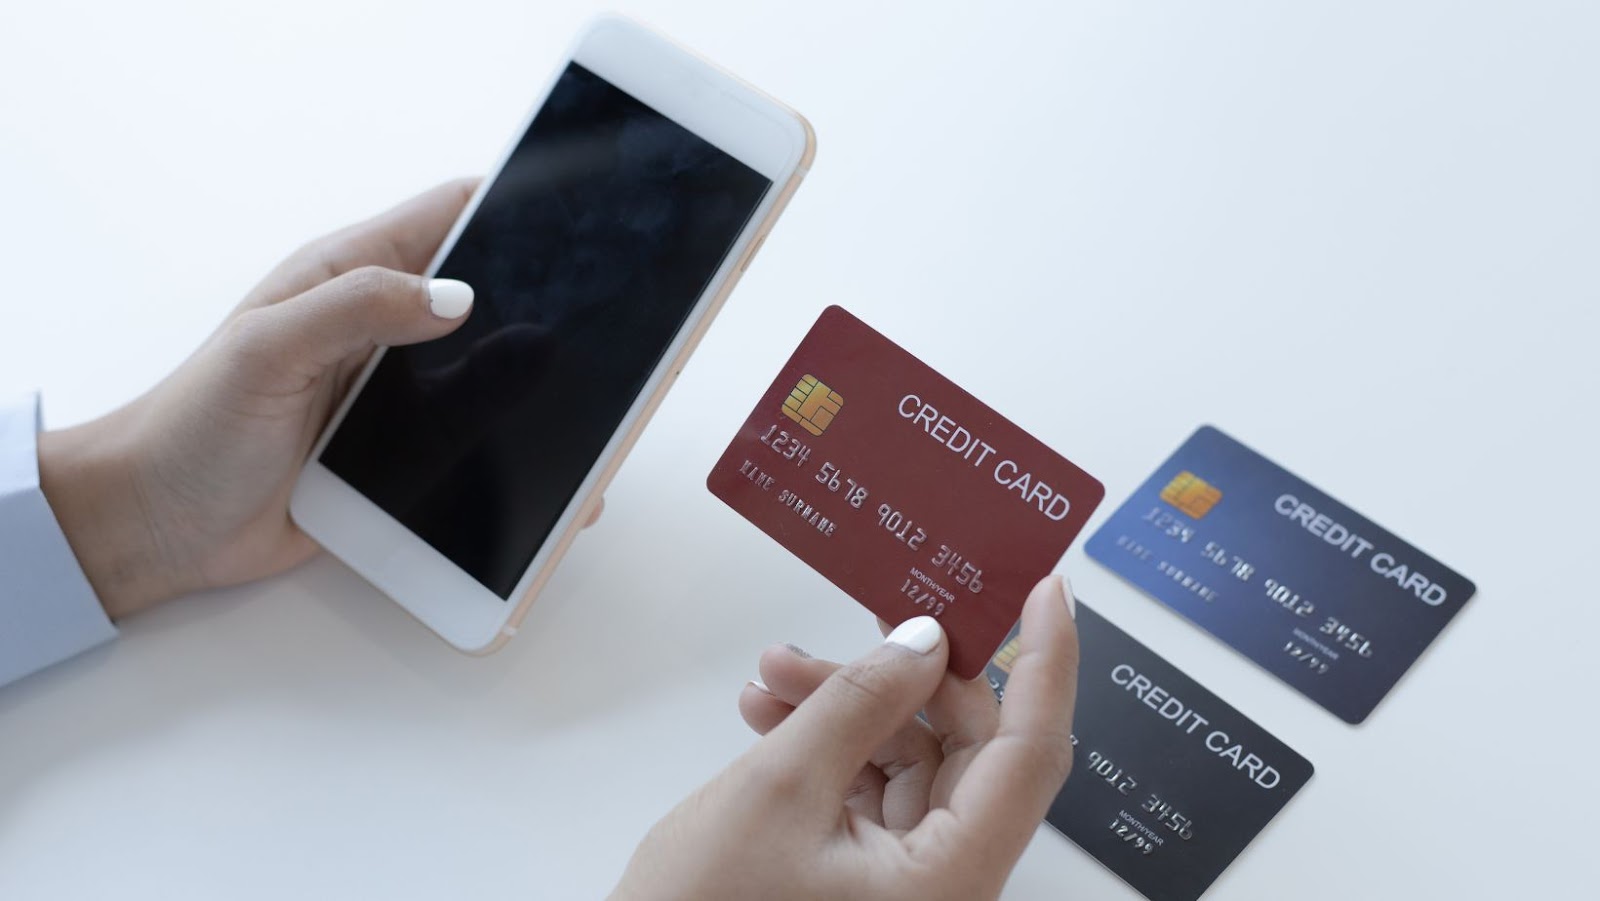 hdfc credit card pin generate customer care number